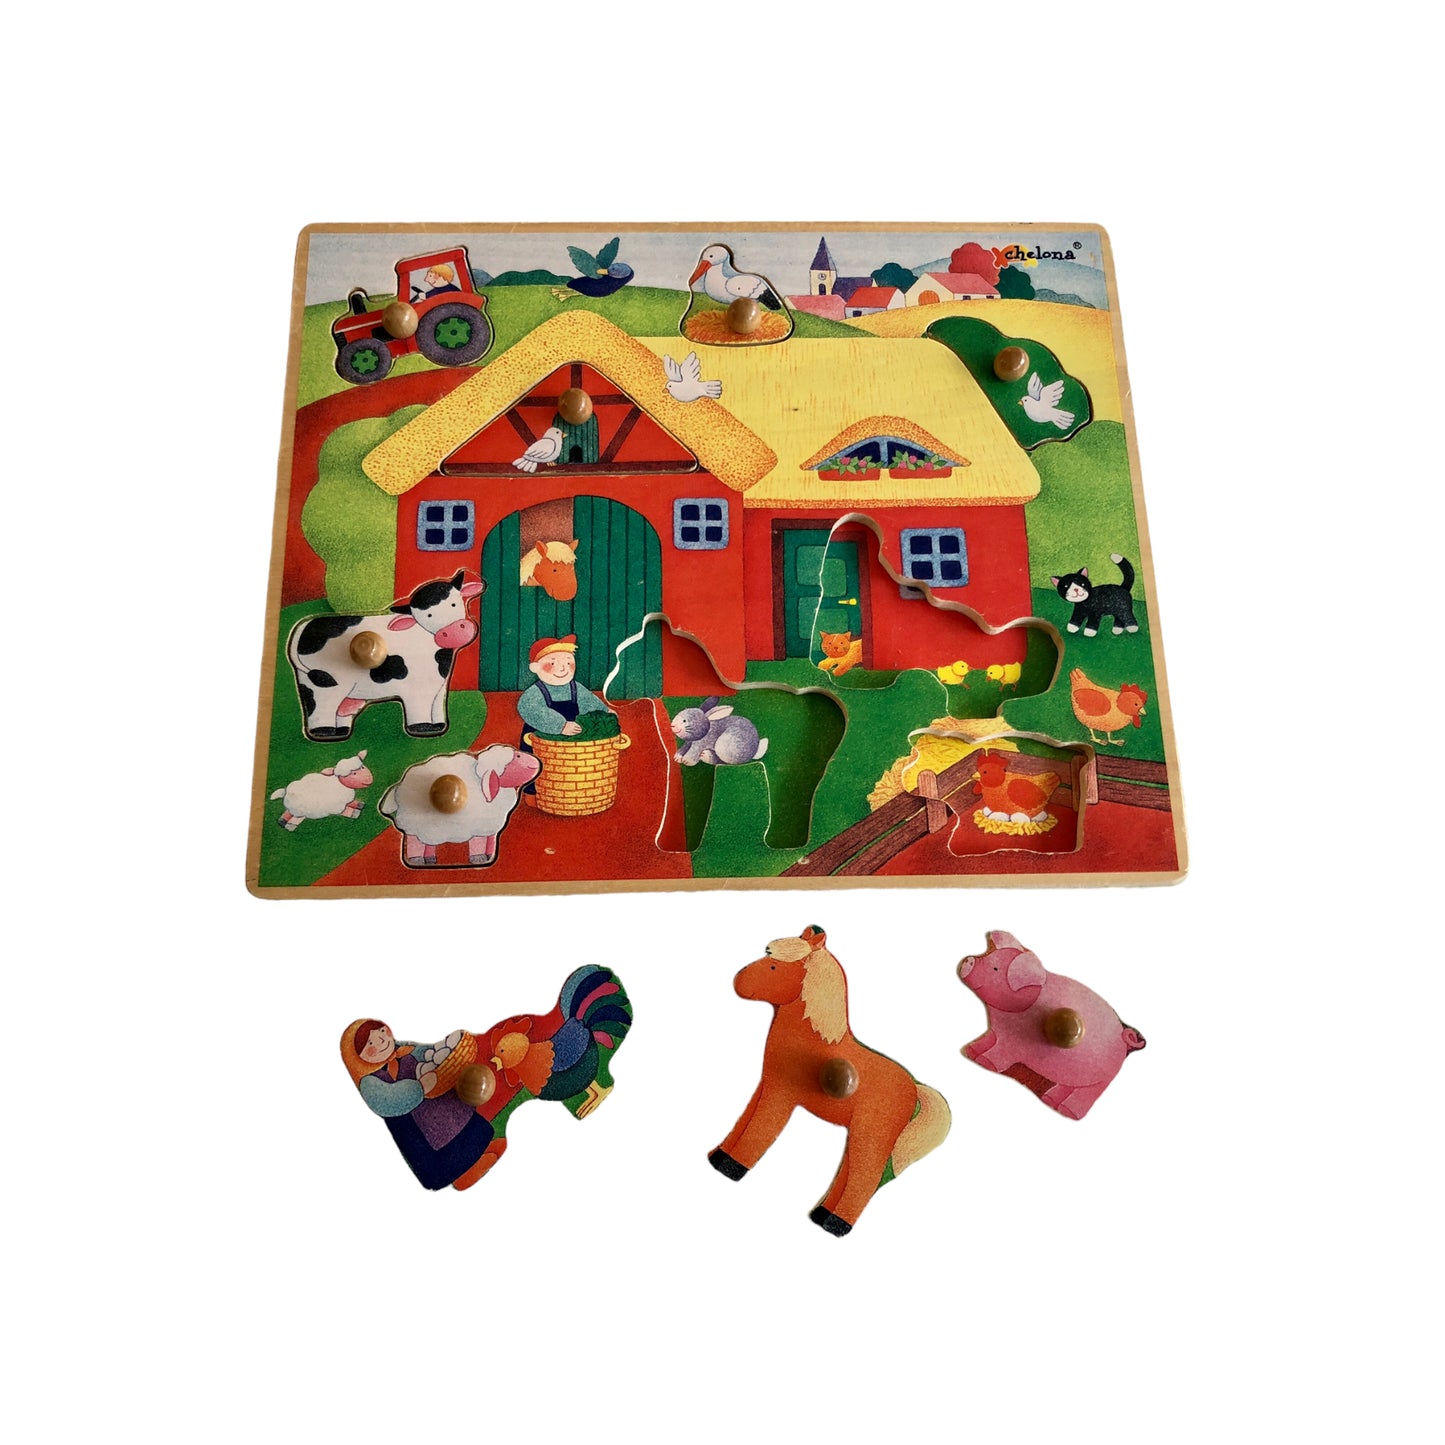 The Farm wooden puzzle